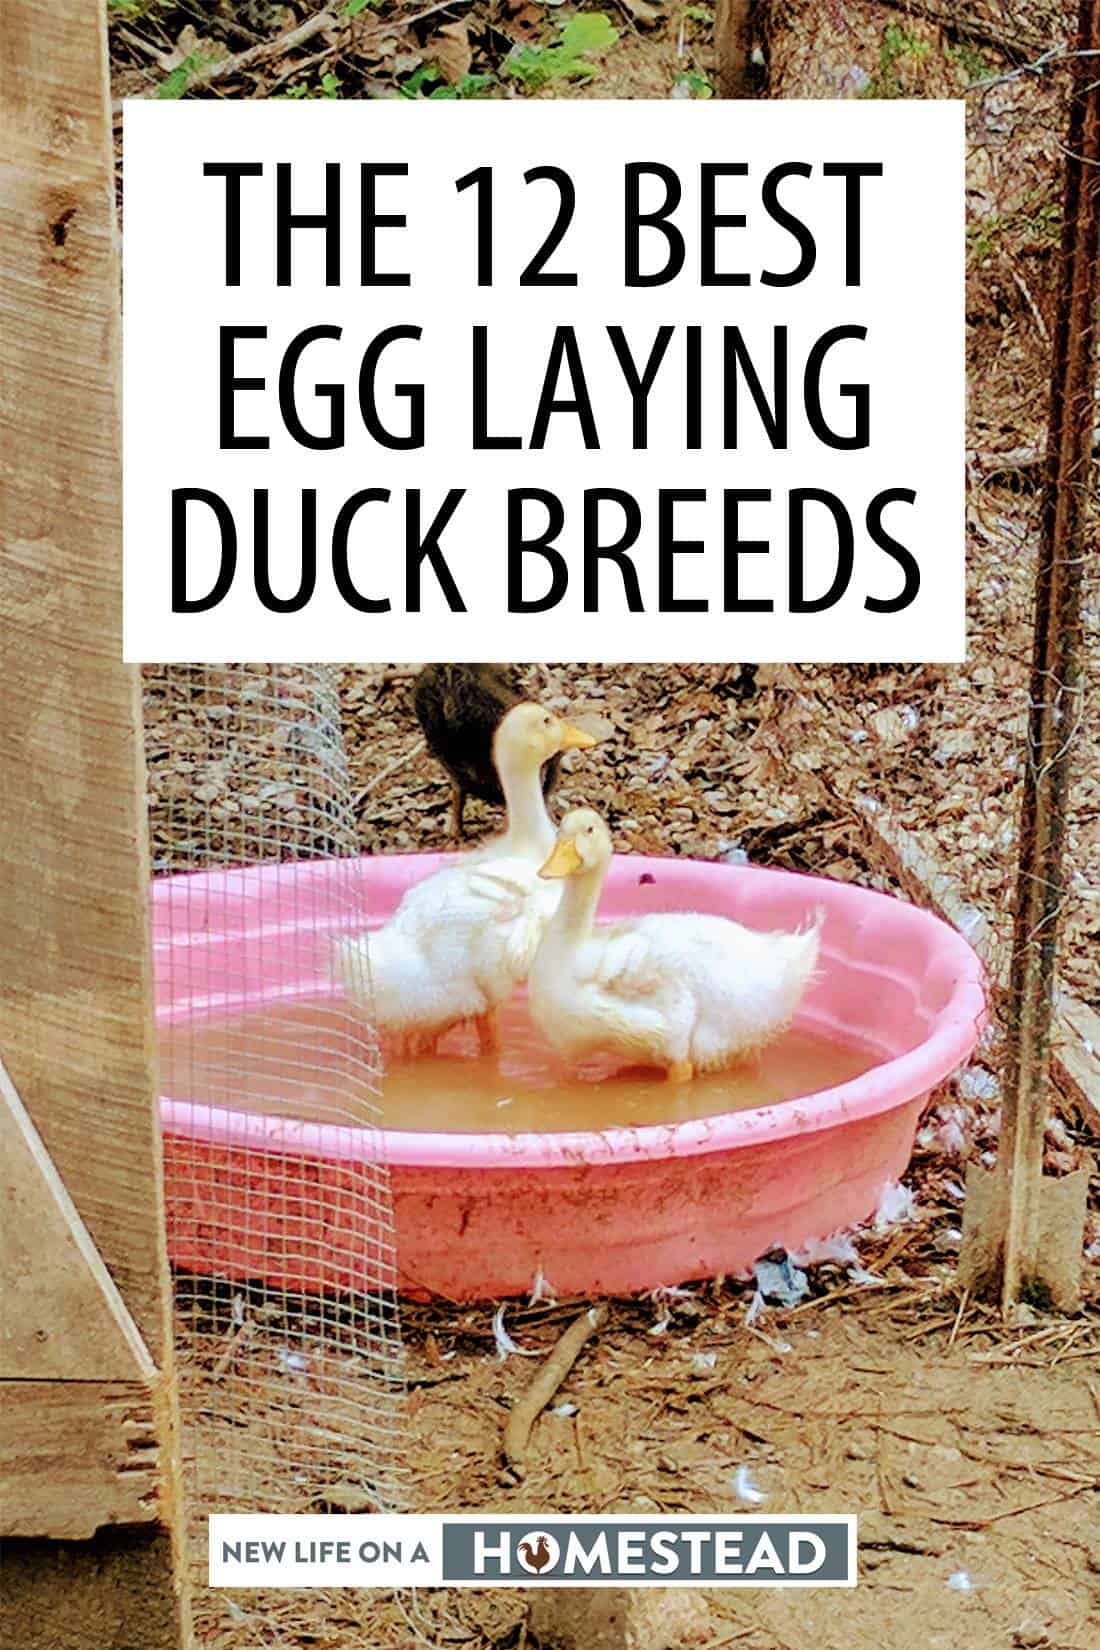 duck egg breed guide pinterest image